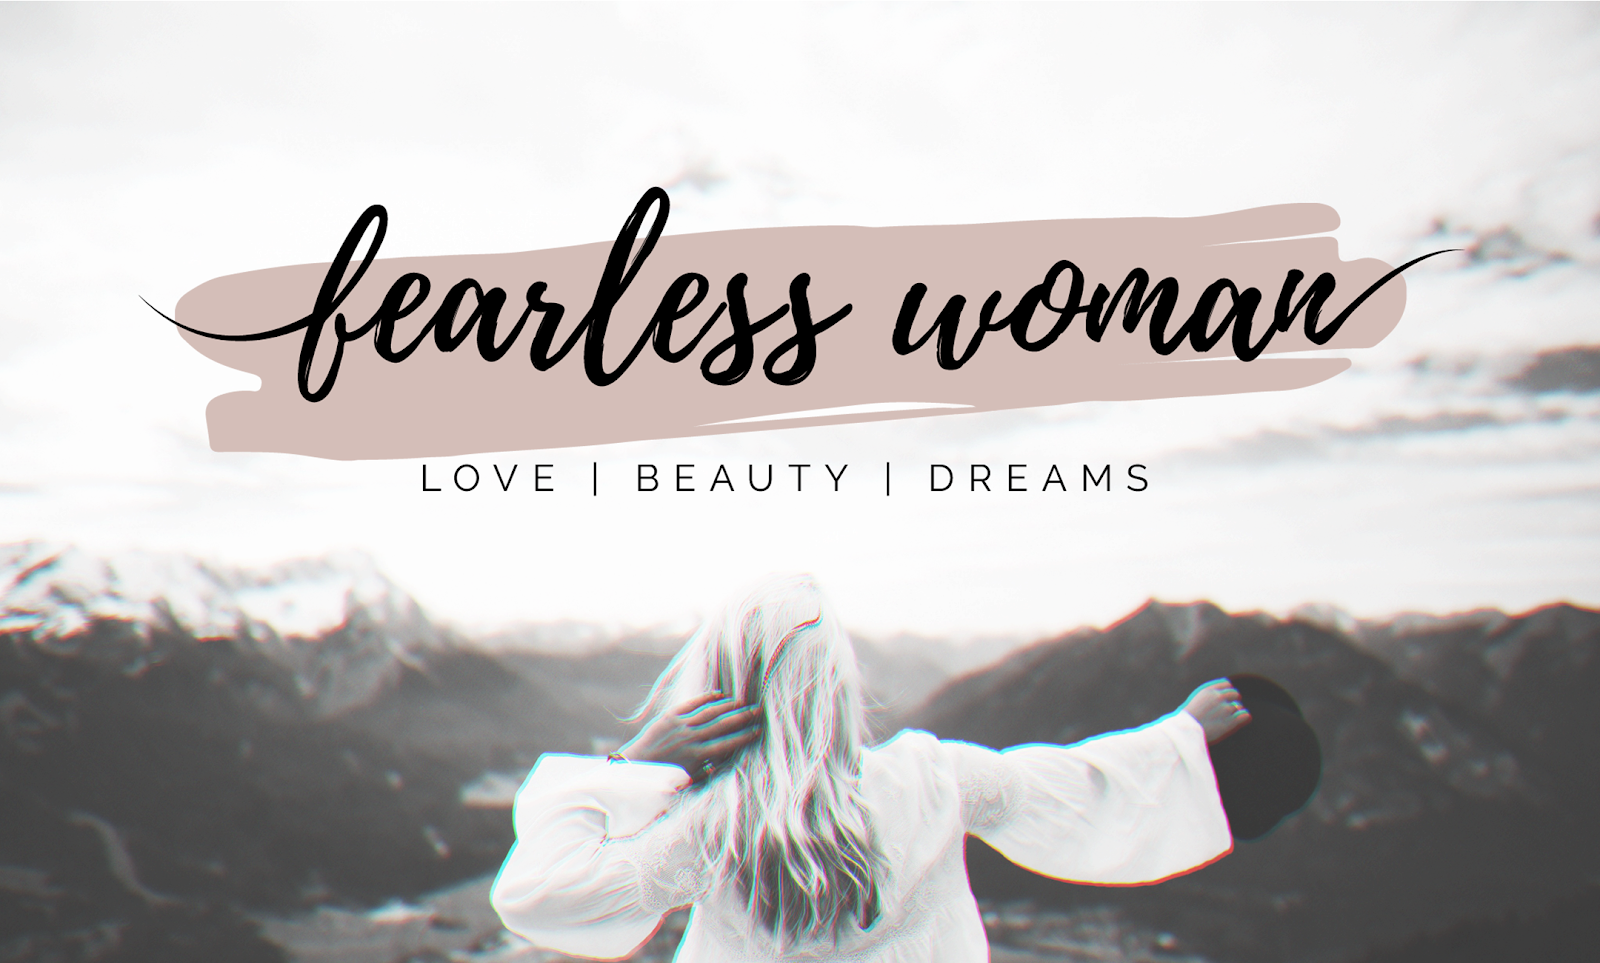 Fearless Woman